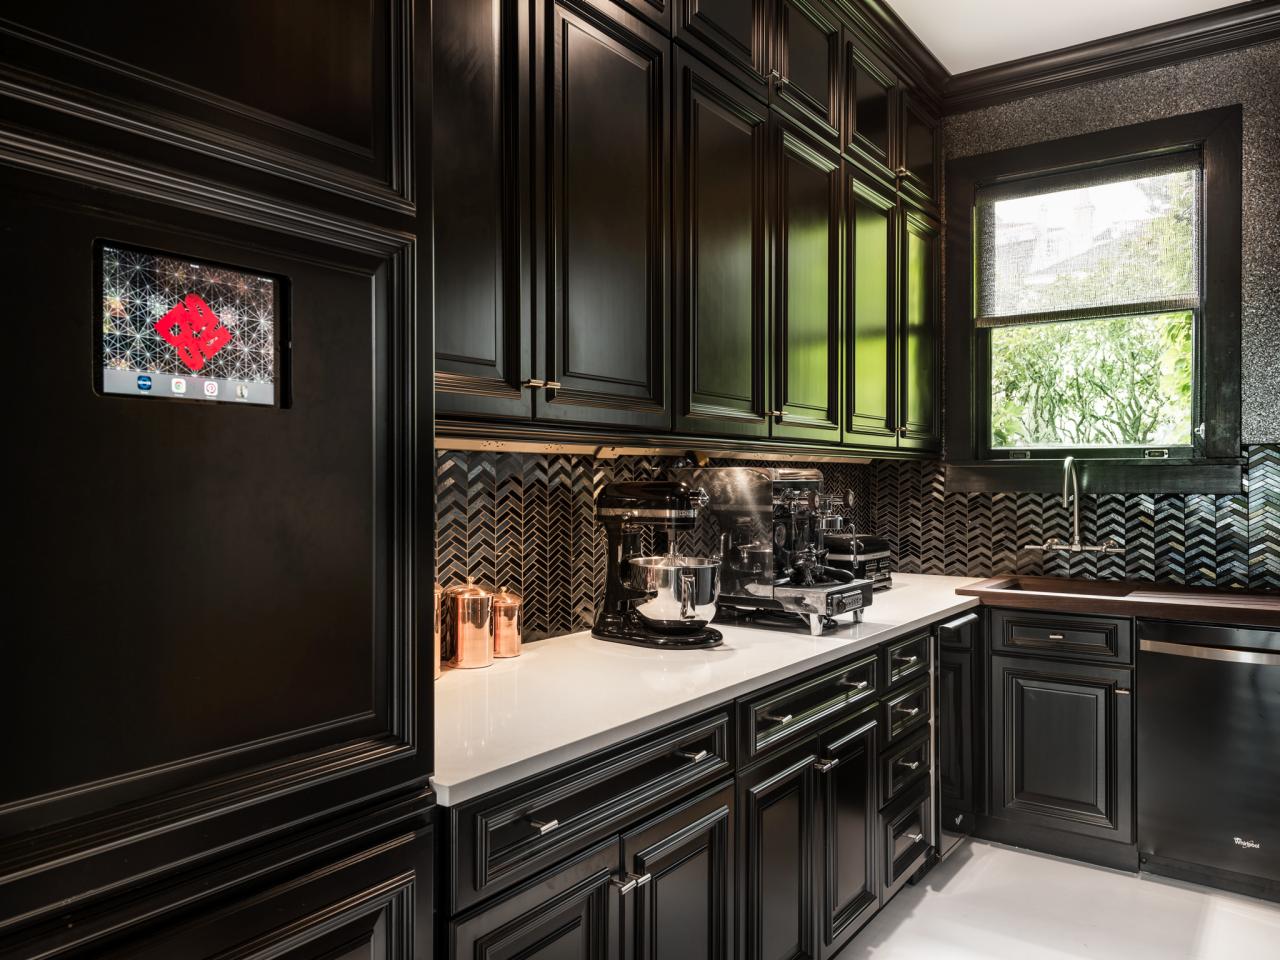 Black Kitchens Are the New White | HGTV's Decorating & Design Blog | HGTV